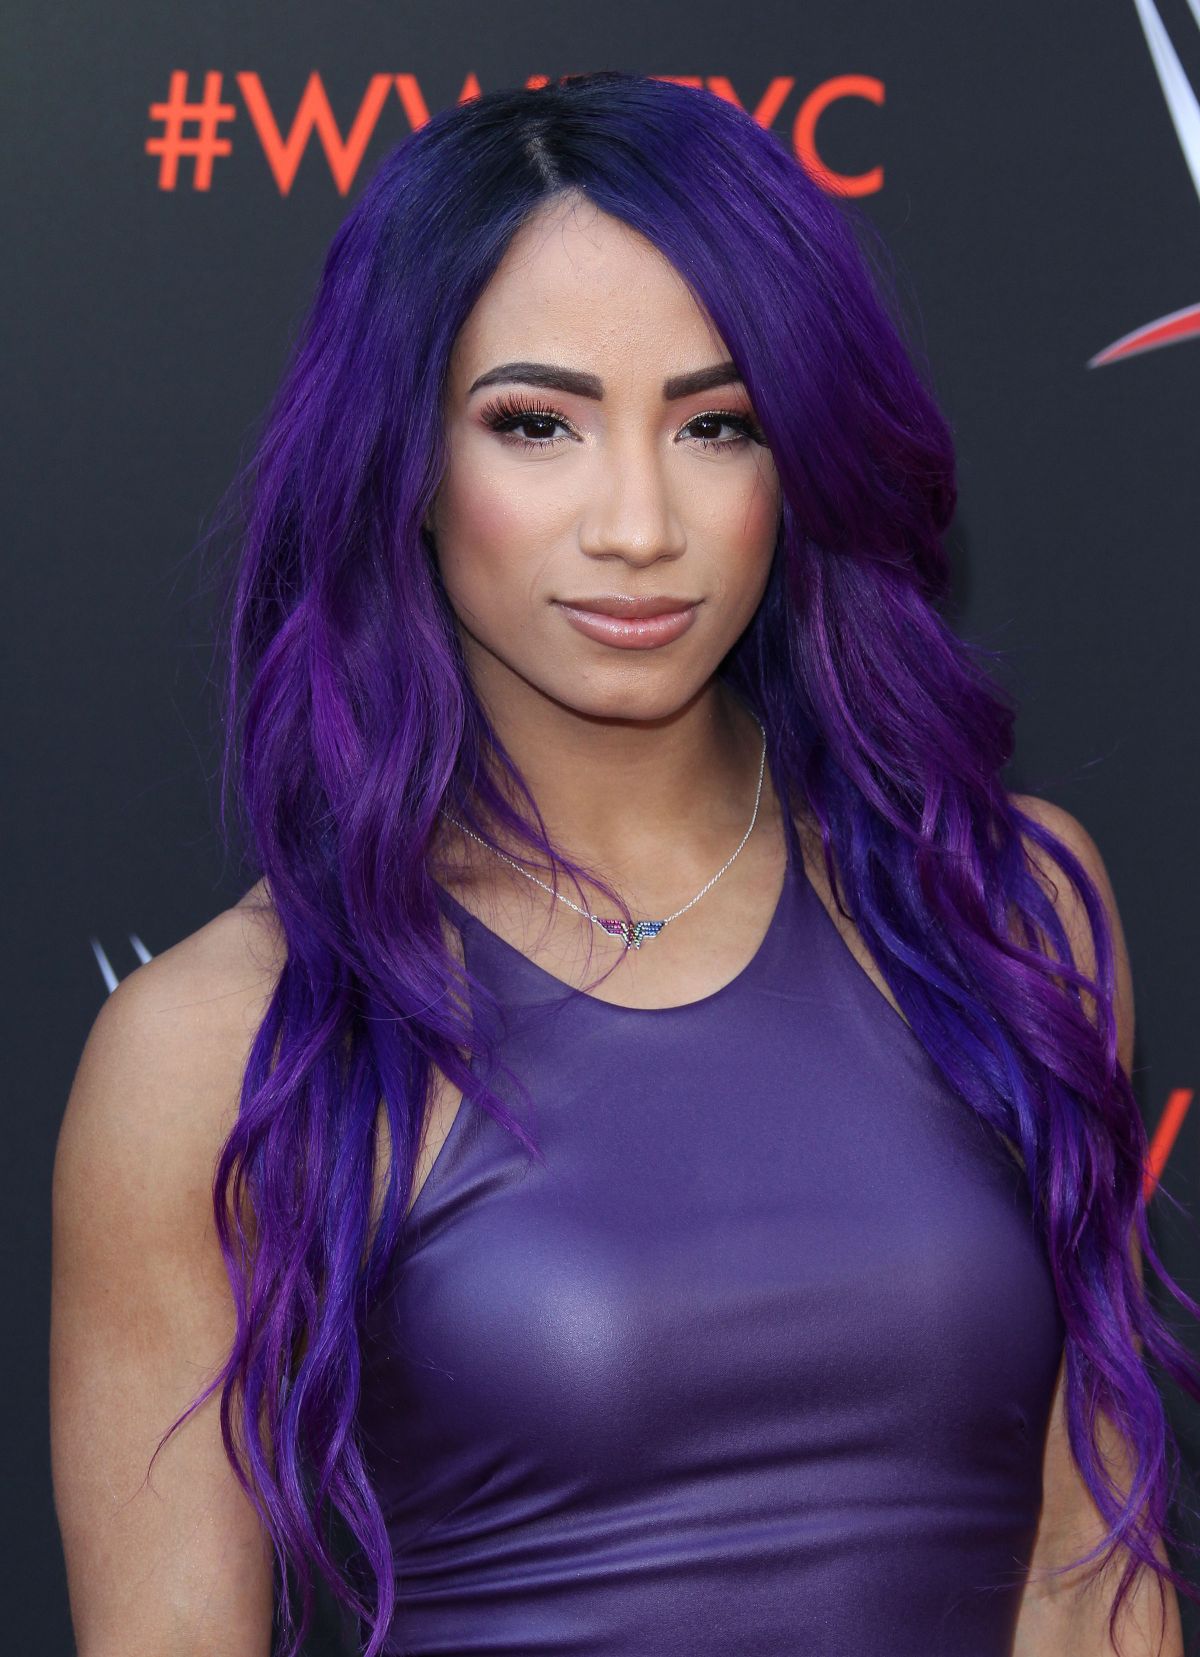 SASHA BANKS at WWE FYC Event in Los Angeles 06/06/2018 – HawtCelebs